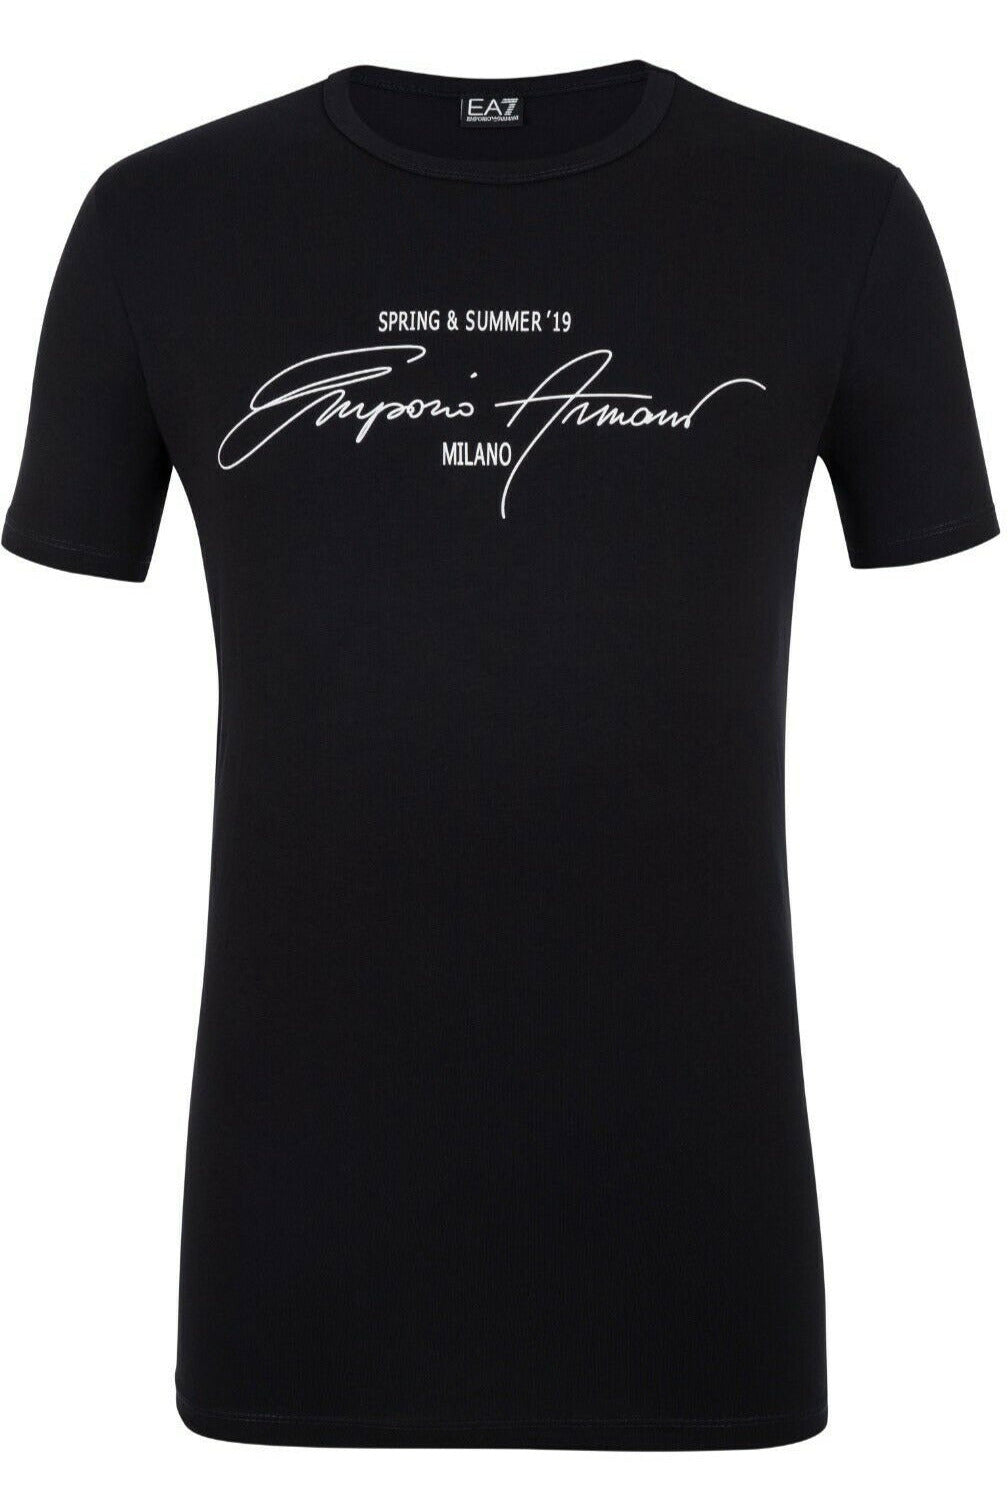 Emporio Armani EA7 Men T-Shirt Color Black Material Cotton